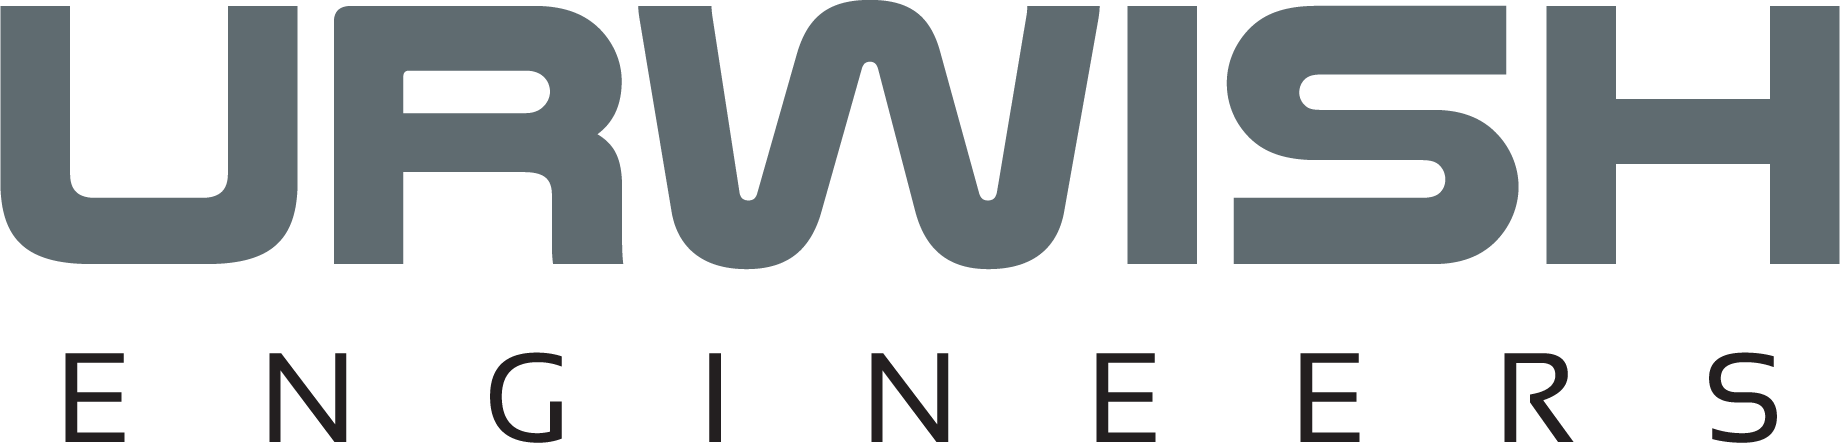 Urwish Engineers Logo